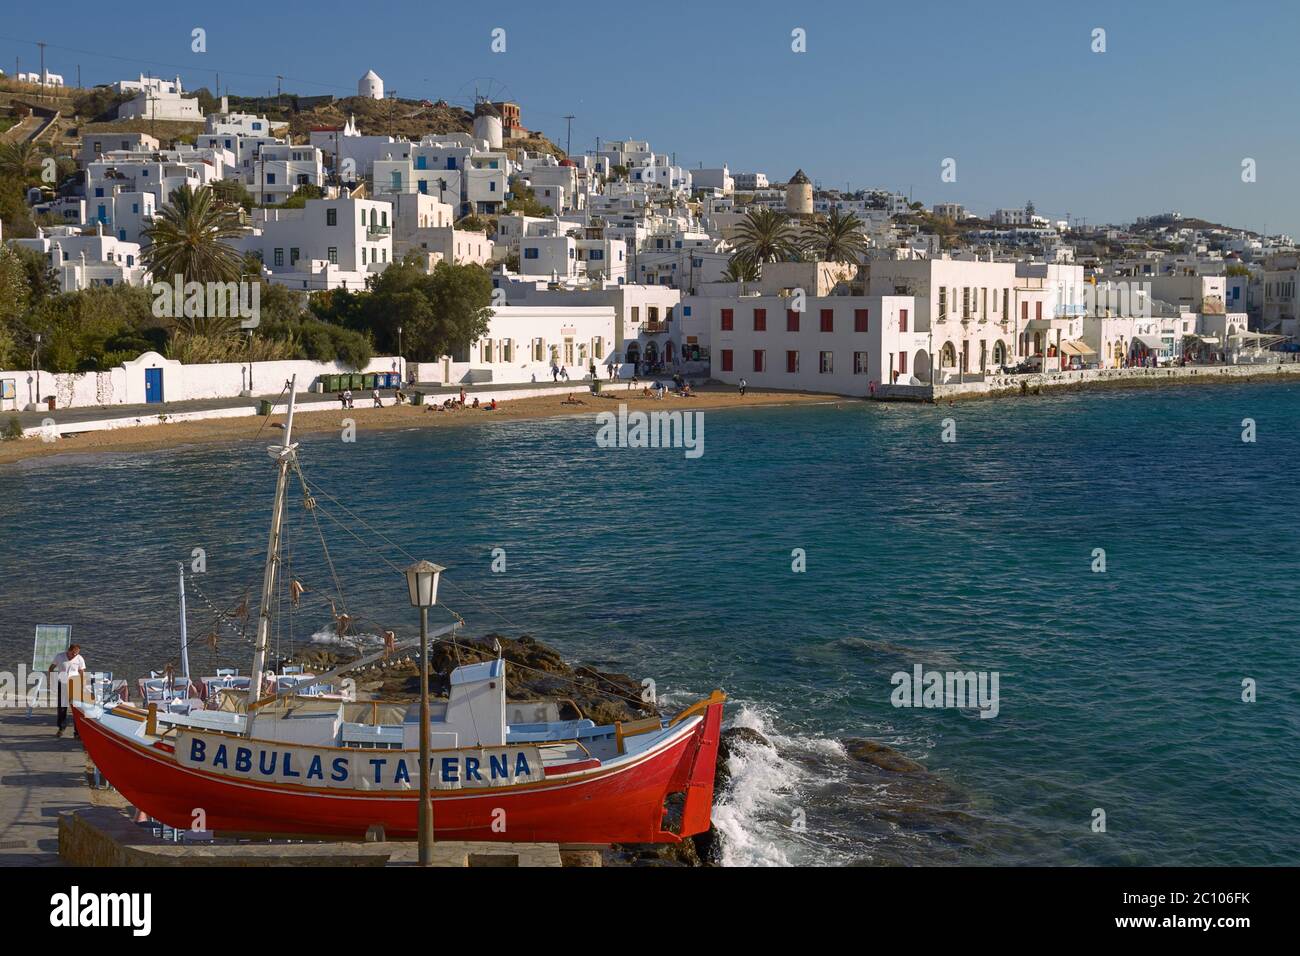 People Enjoying a Vacation at Mediterranean Island of Mykonos Greece Stock Photo